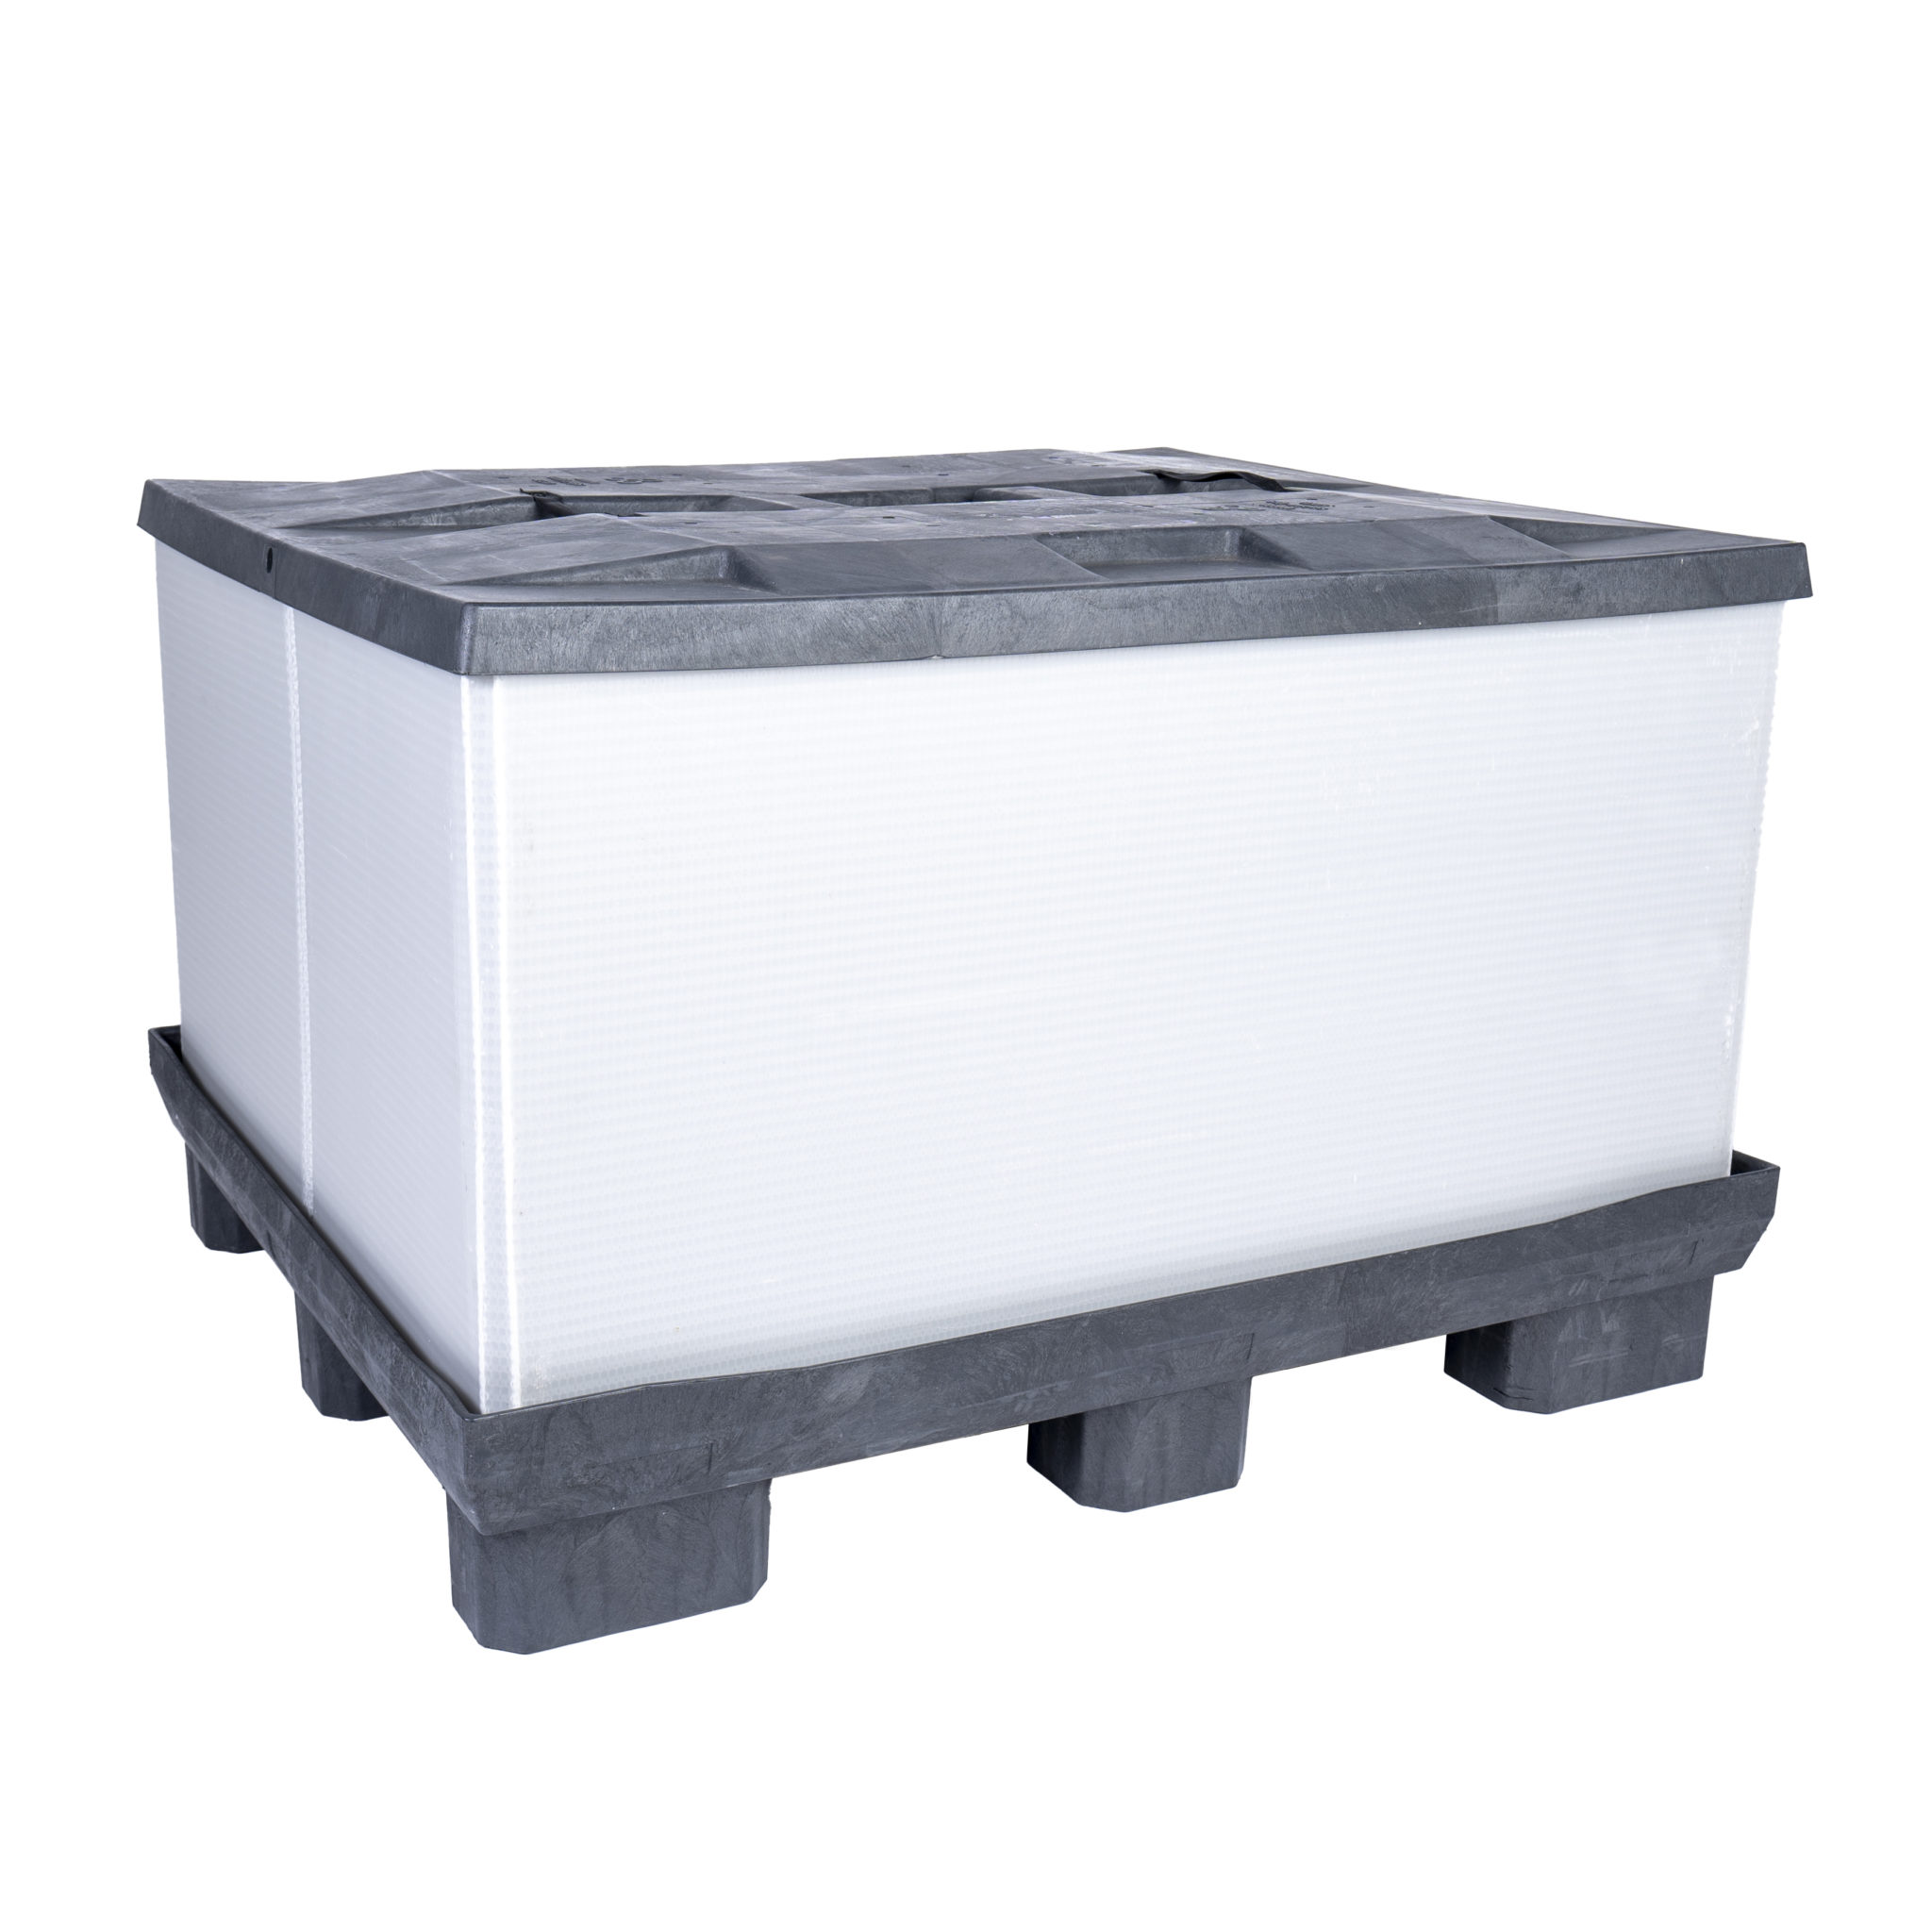 48 x 40 x 30 – Reusable Bulk Container